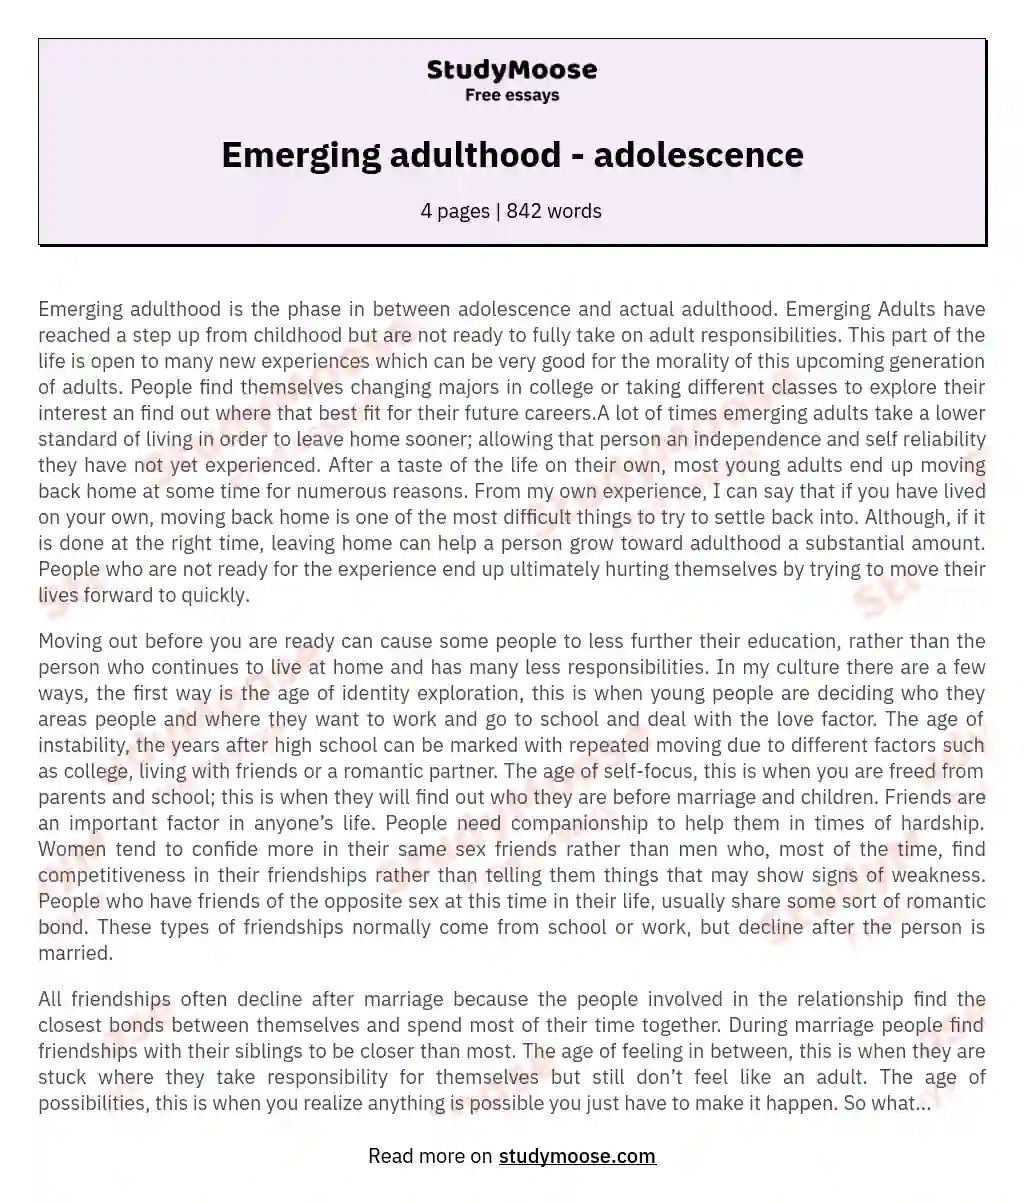 Emerging adulthood - adolescence essay